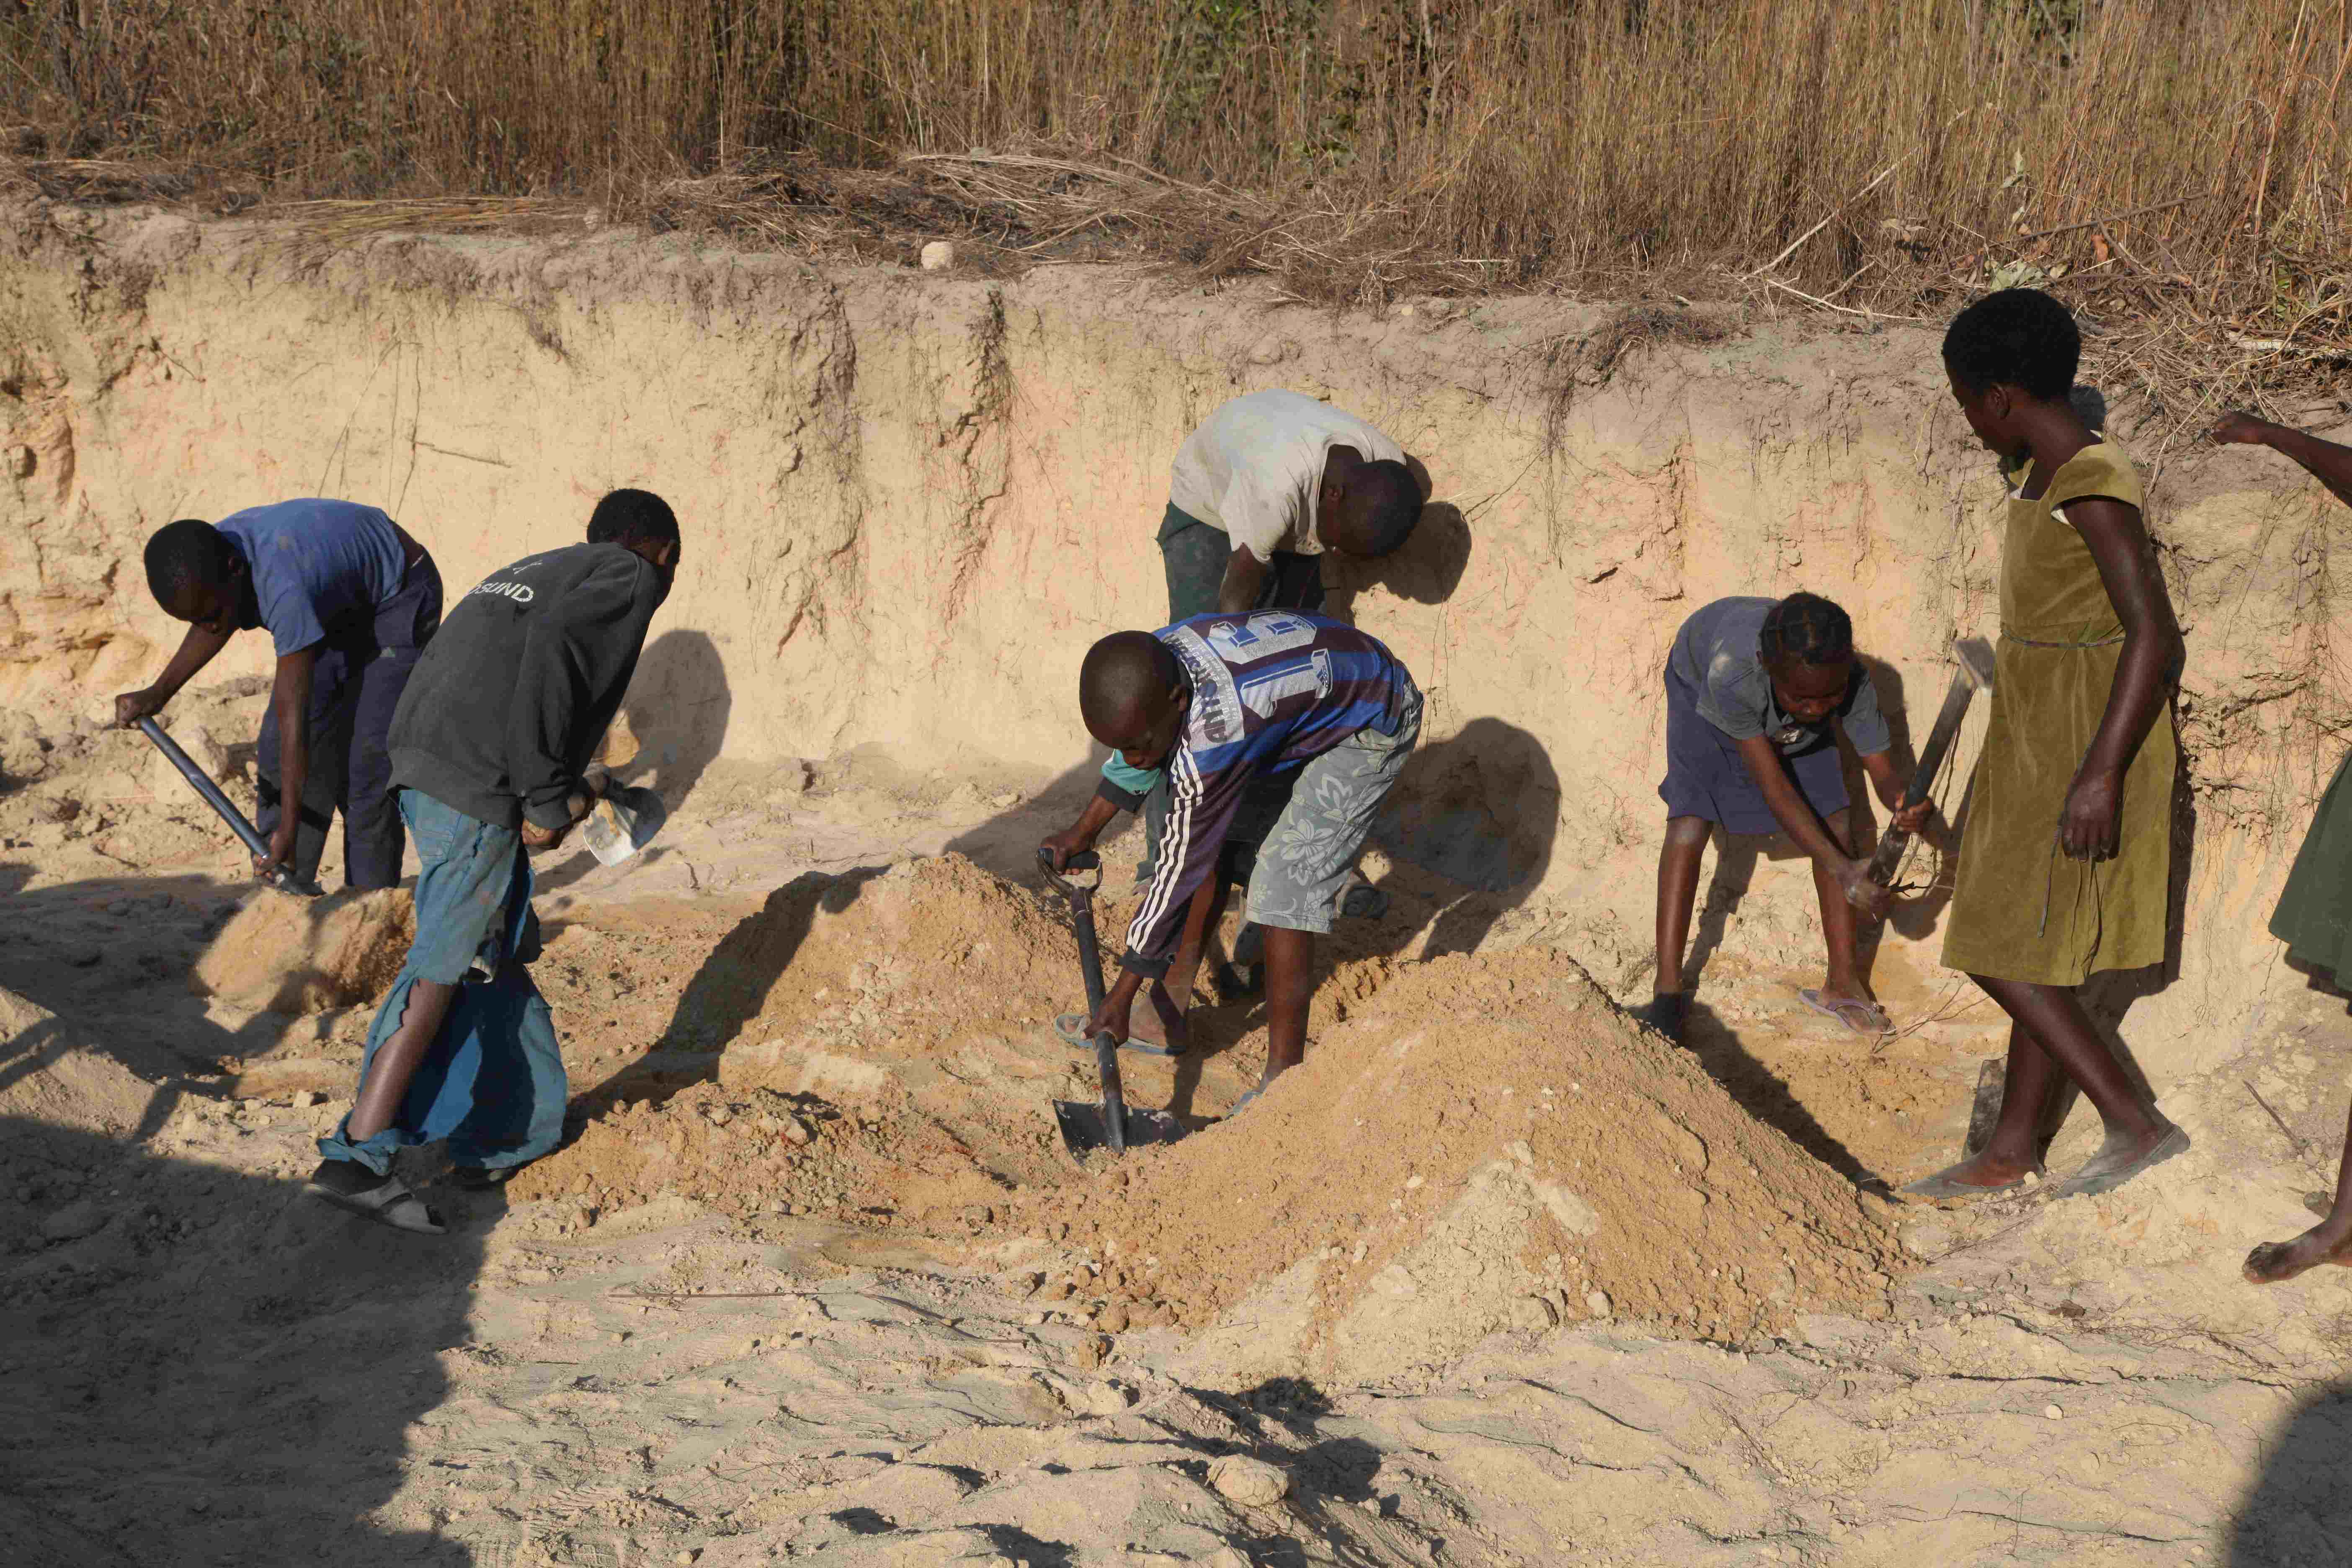 Kinder in Sambia schippen kiloweise Sand. (Quelle: Christian Herrmanny)